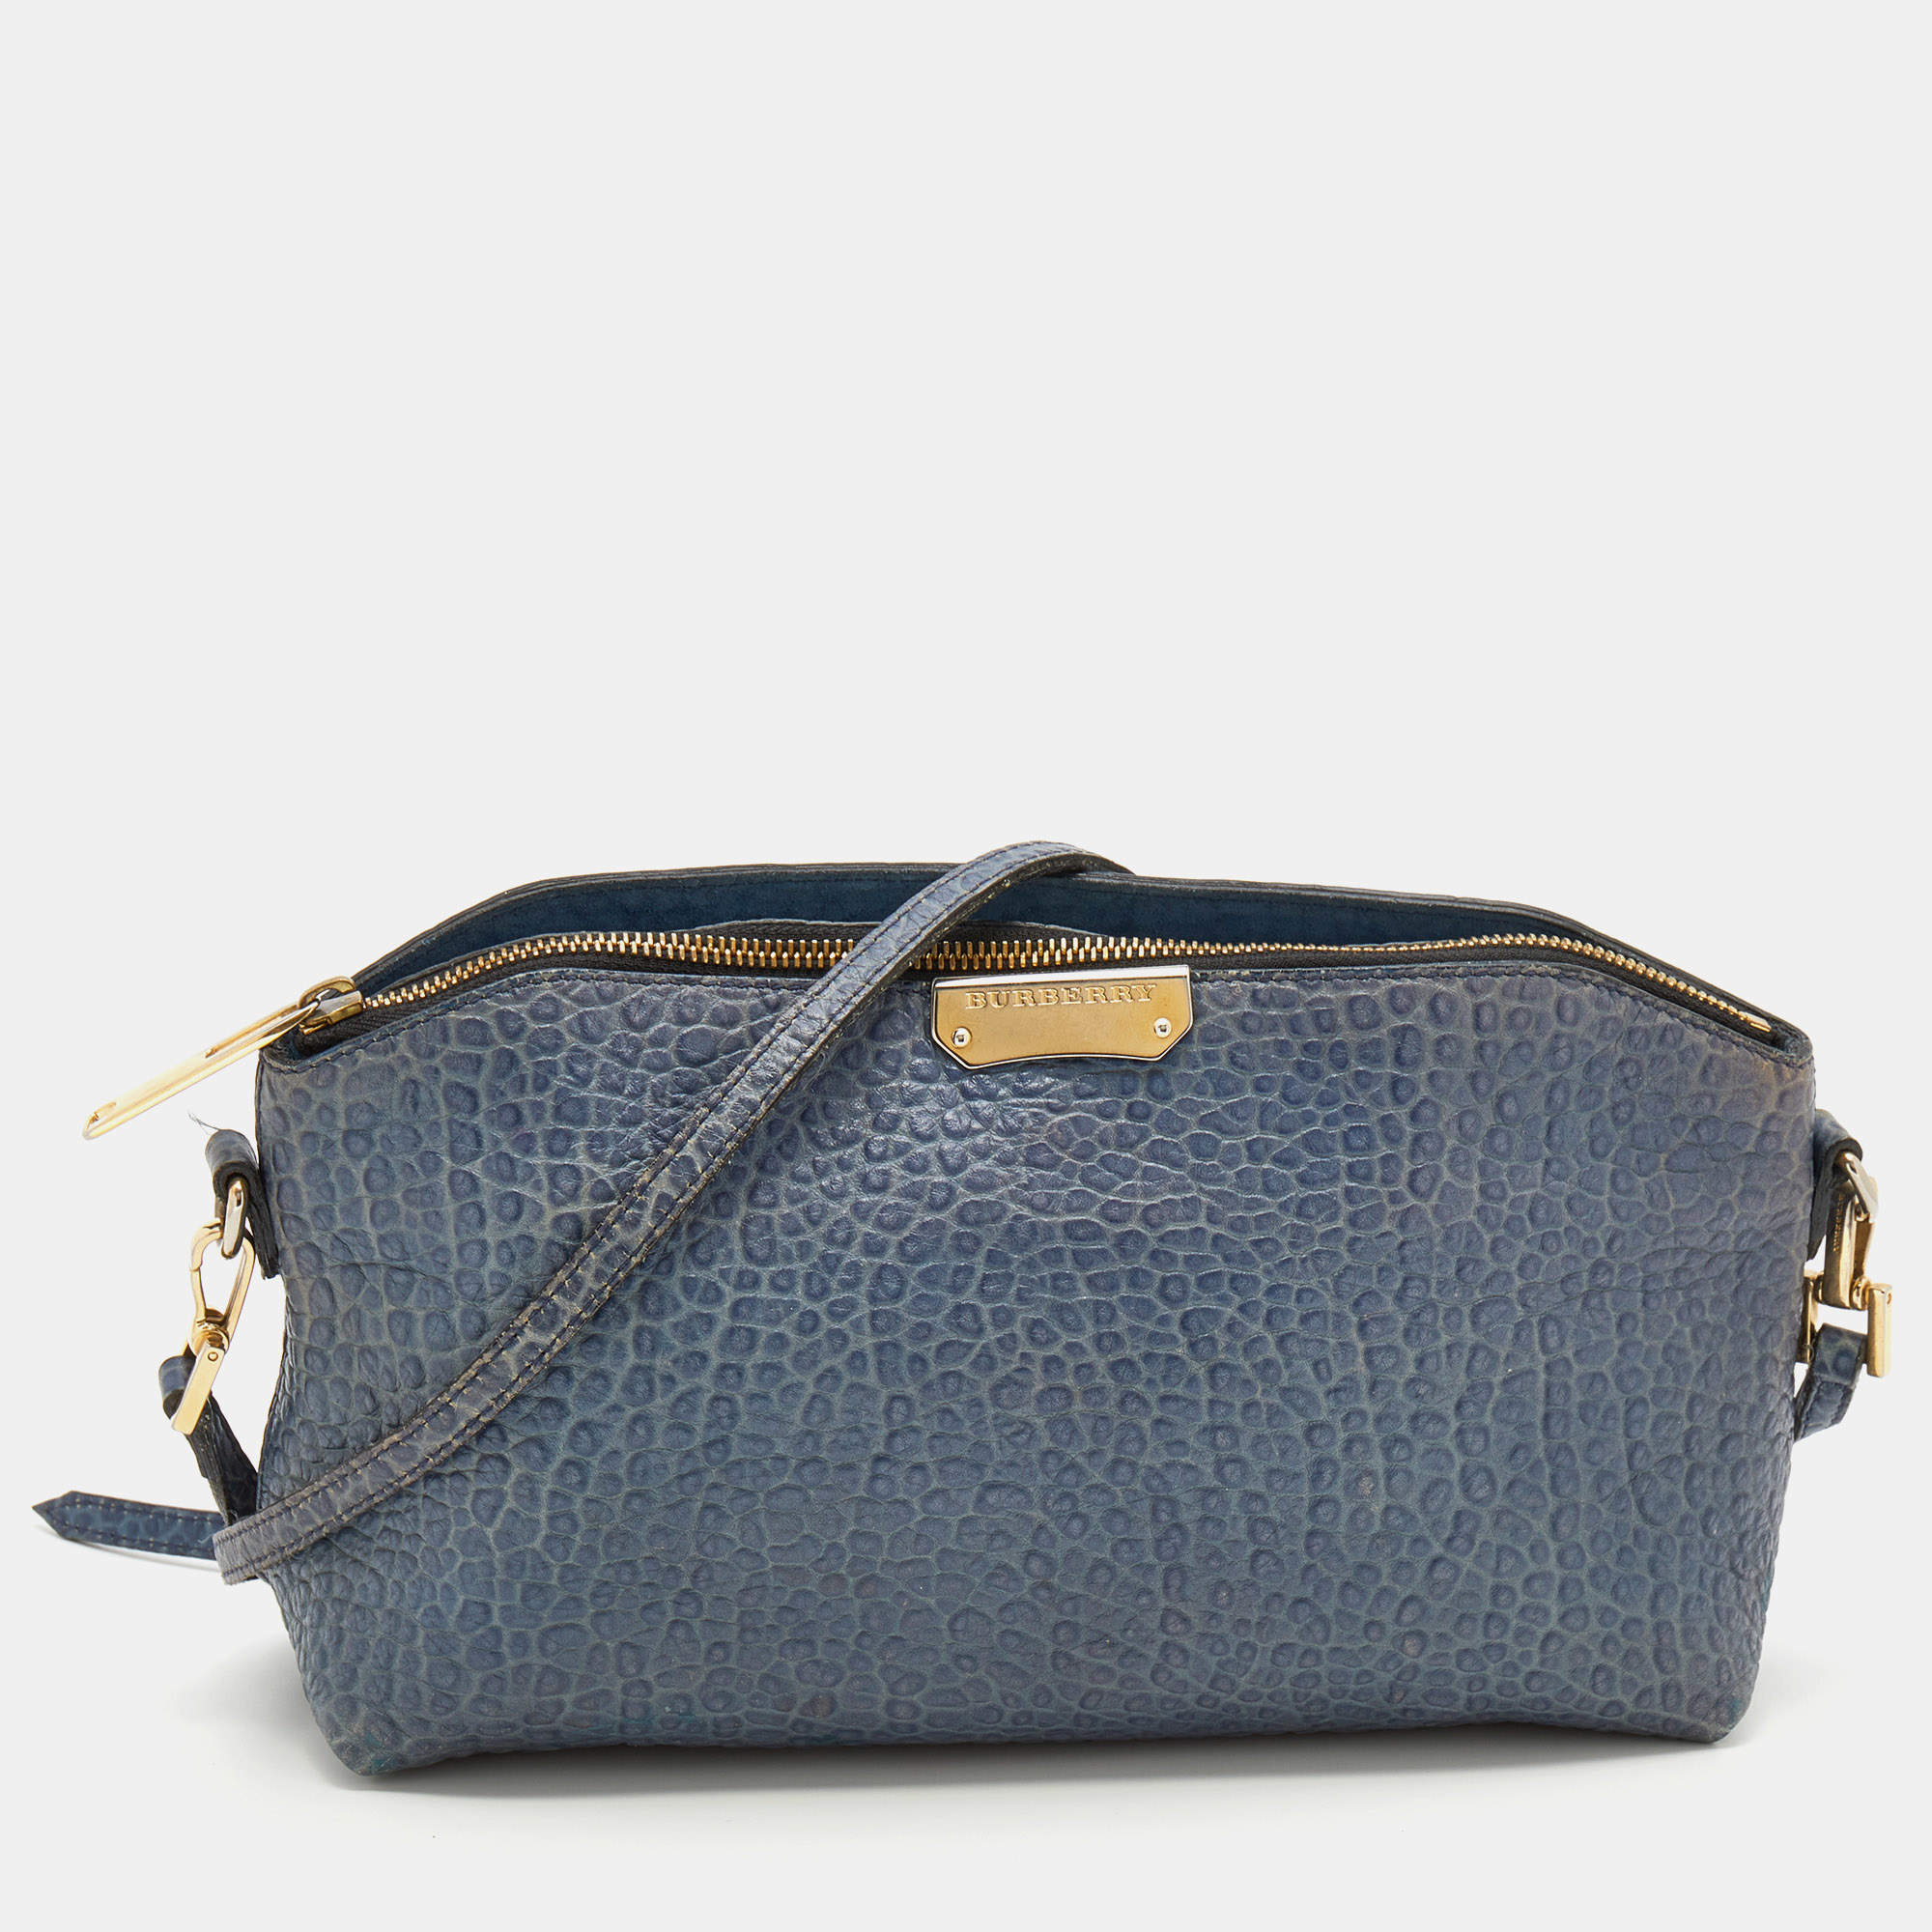 Burberry Blue Grain Leather Crossbody Bag Burberry | The Luxury Closet